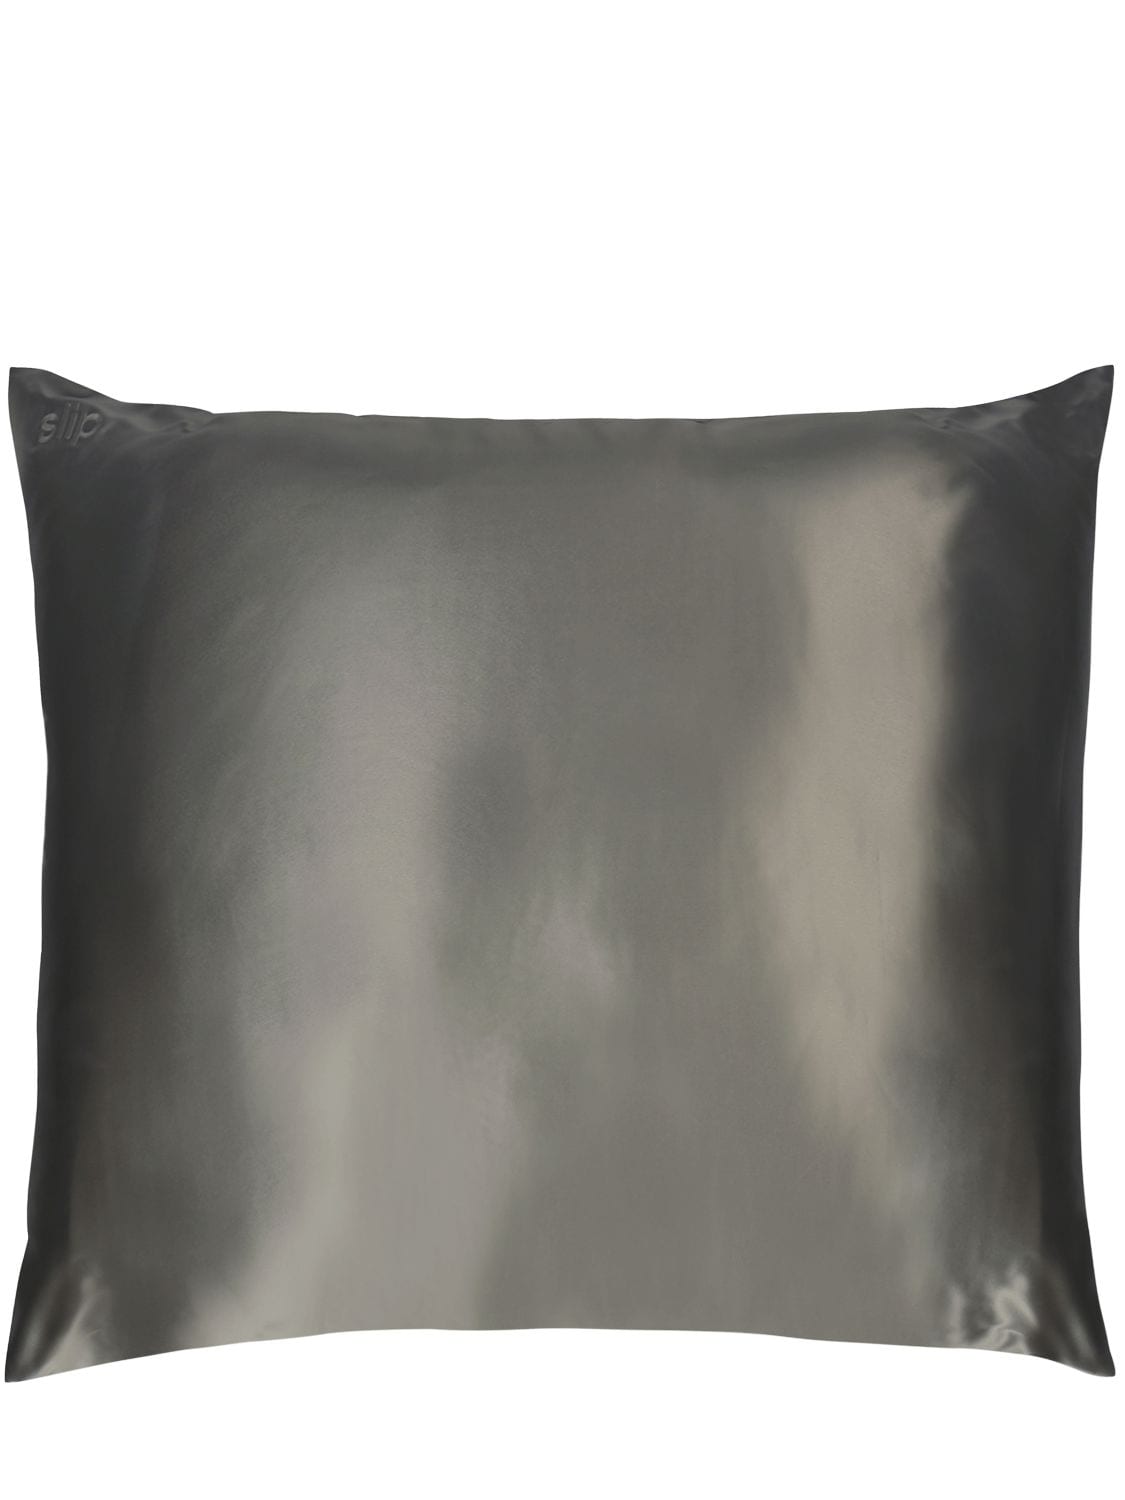 Image of Euro Silk Pillowcase